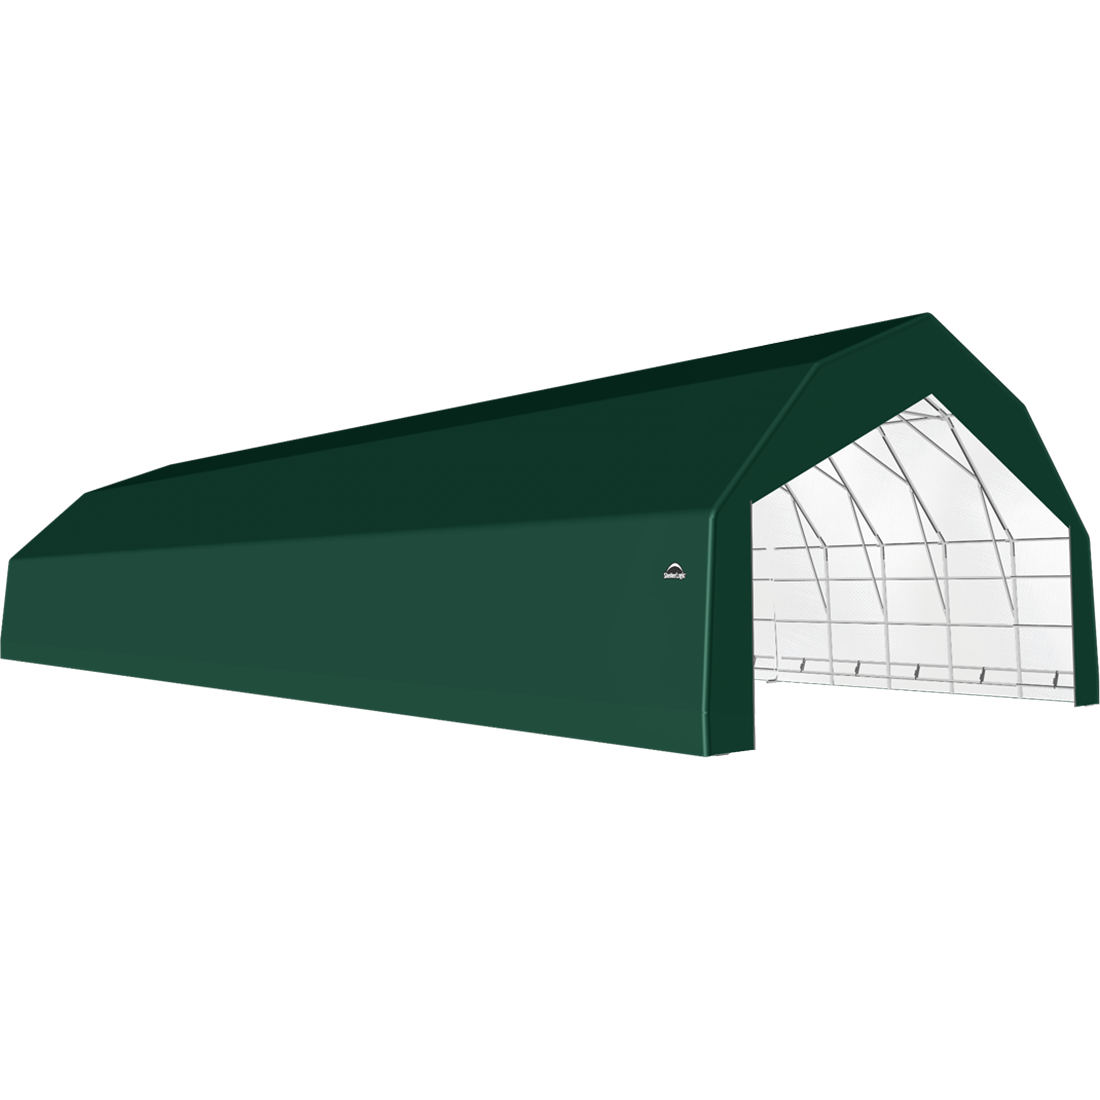 ShelterTech SP Series Barn Shelter, 30 ft. x 84 ft. x 18 ft. Heavy Duty PVC 14.5 oz. Green